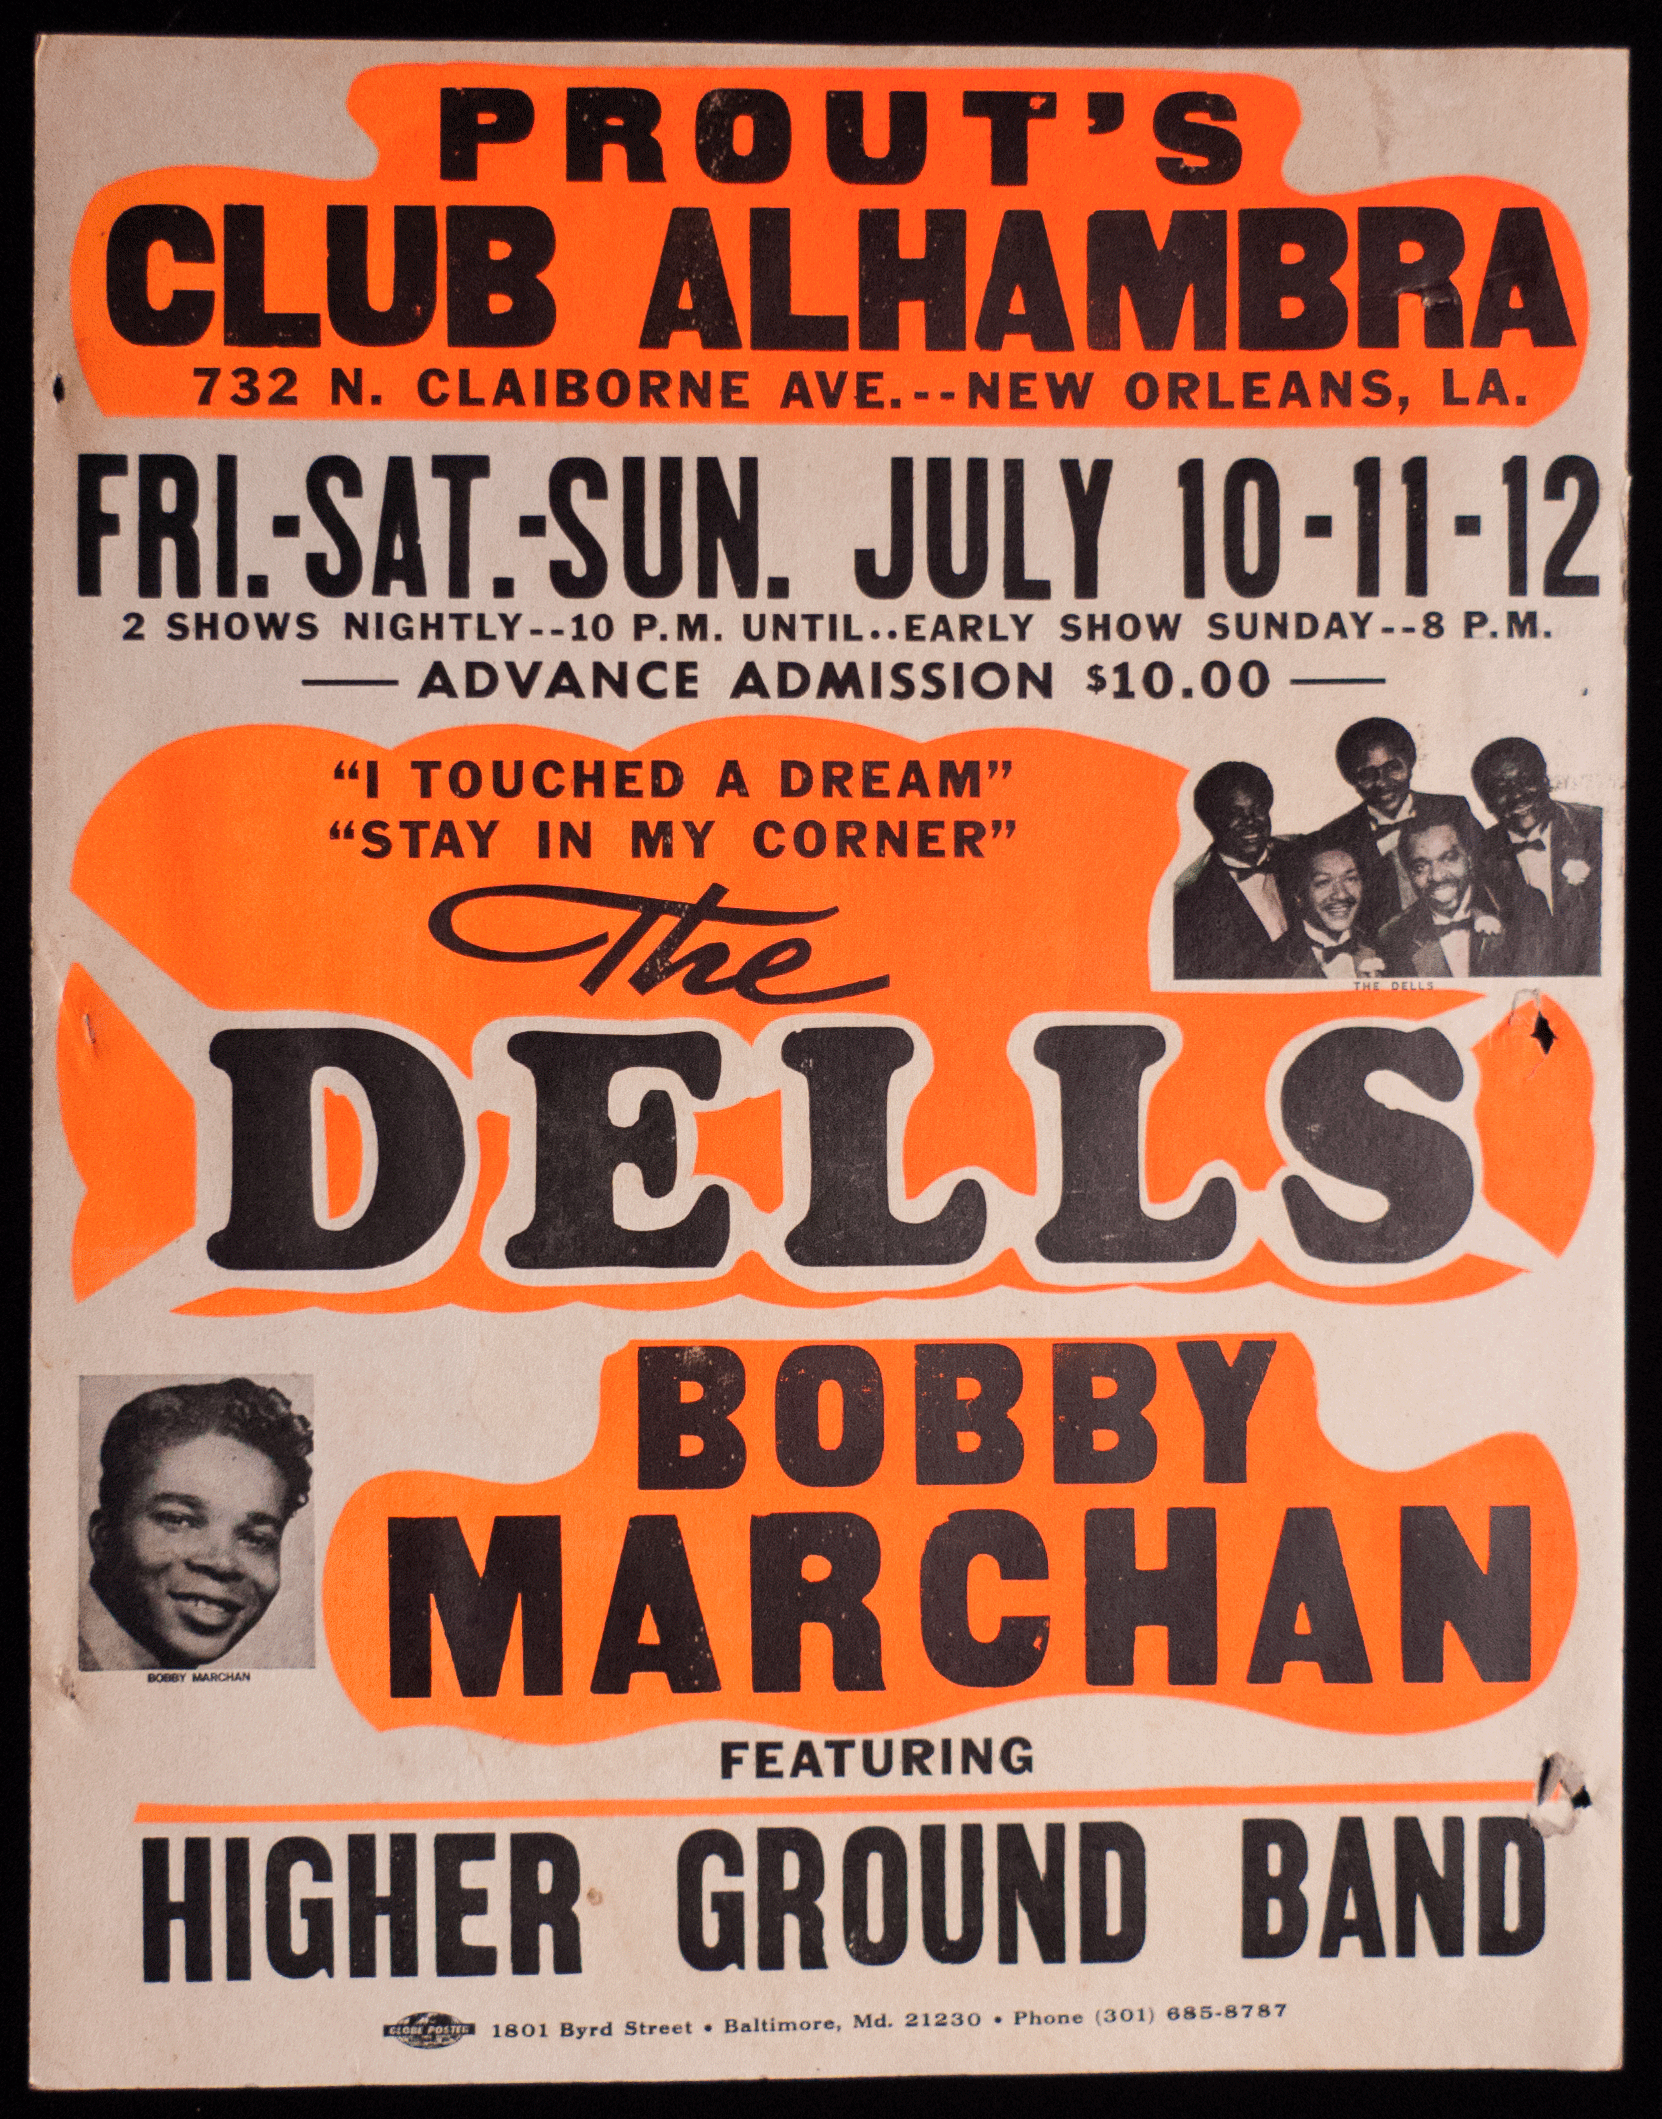 Club-Alhambra-DELLS.gif